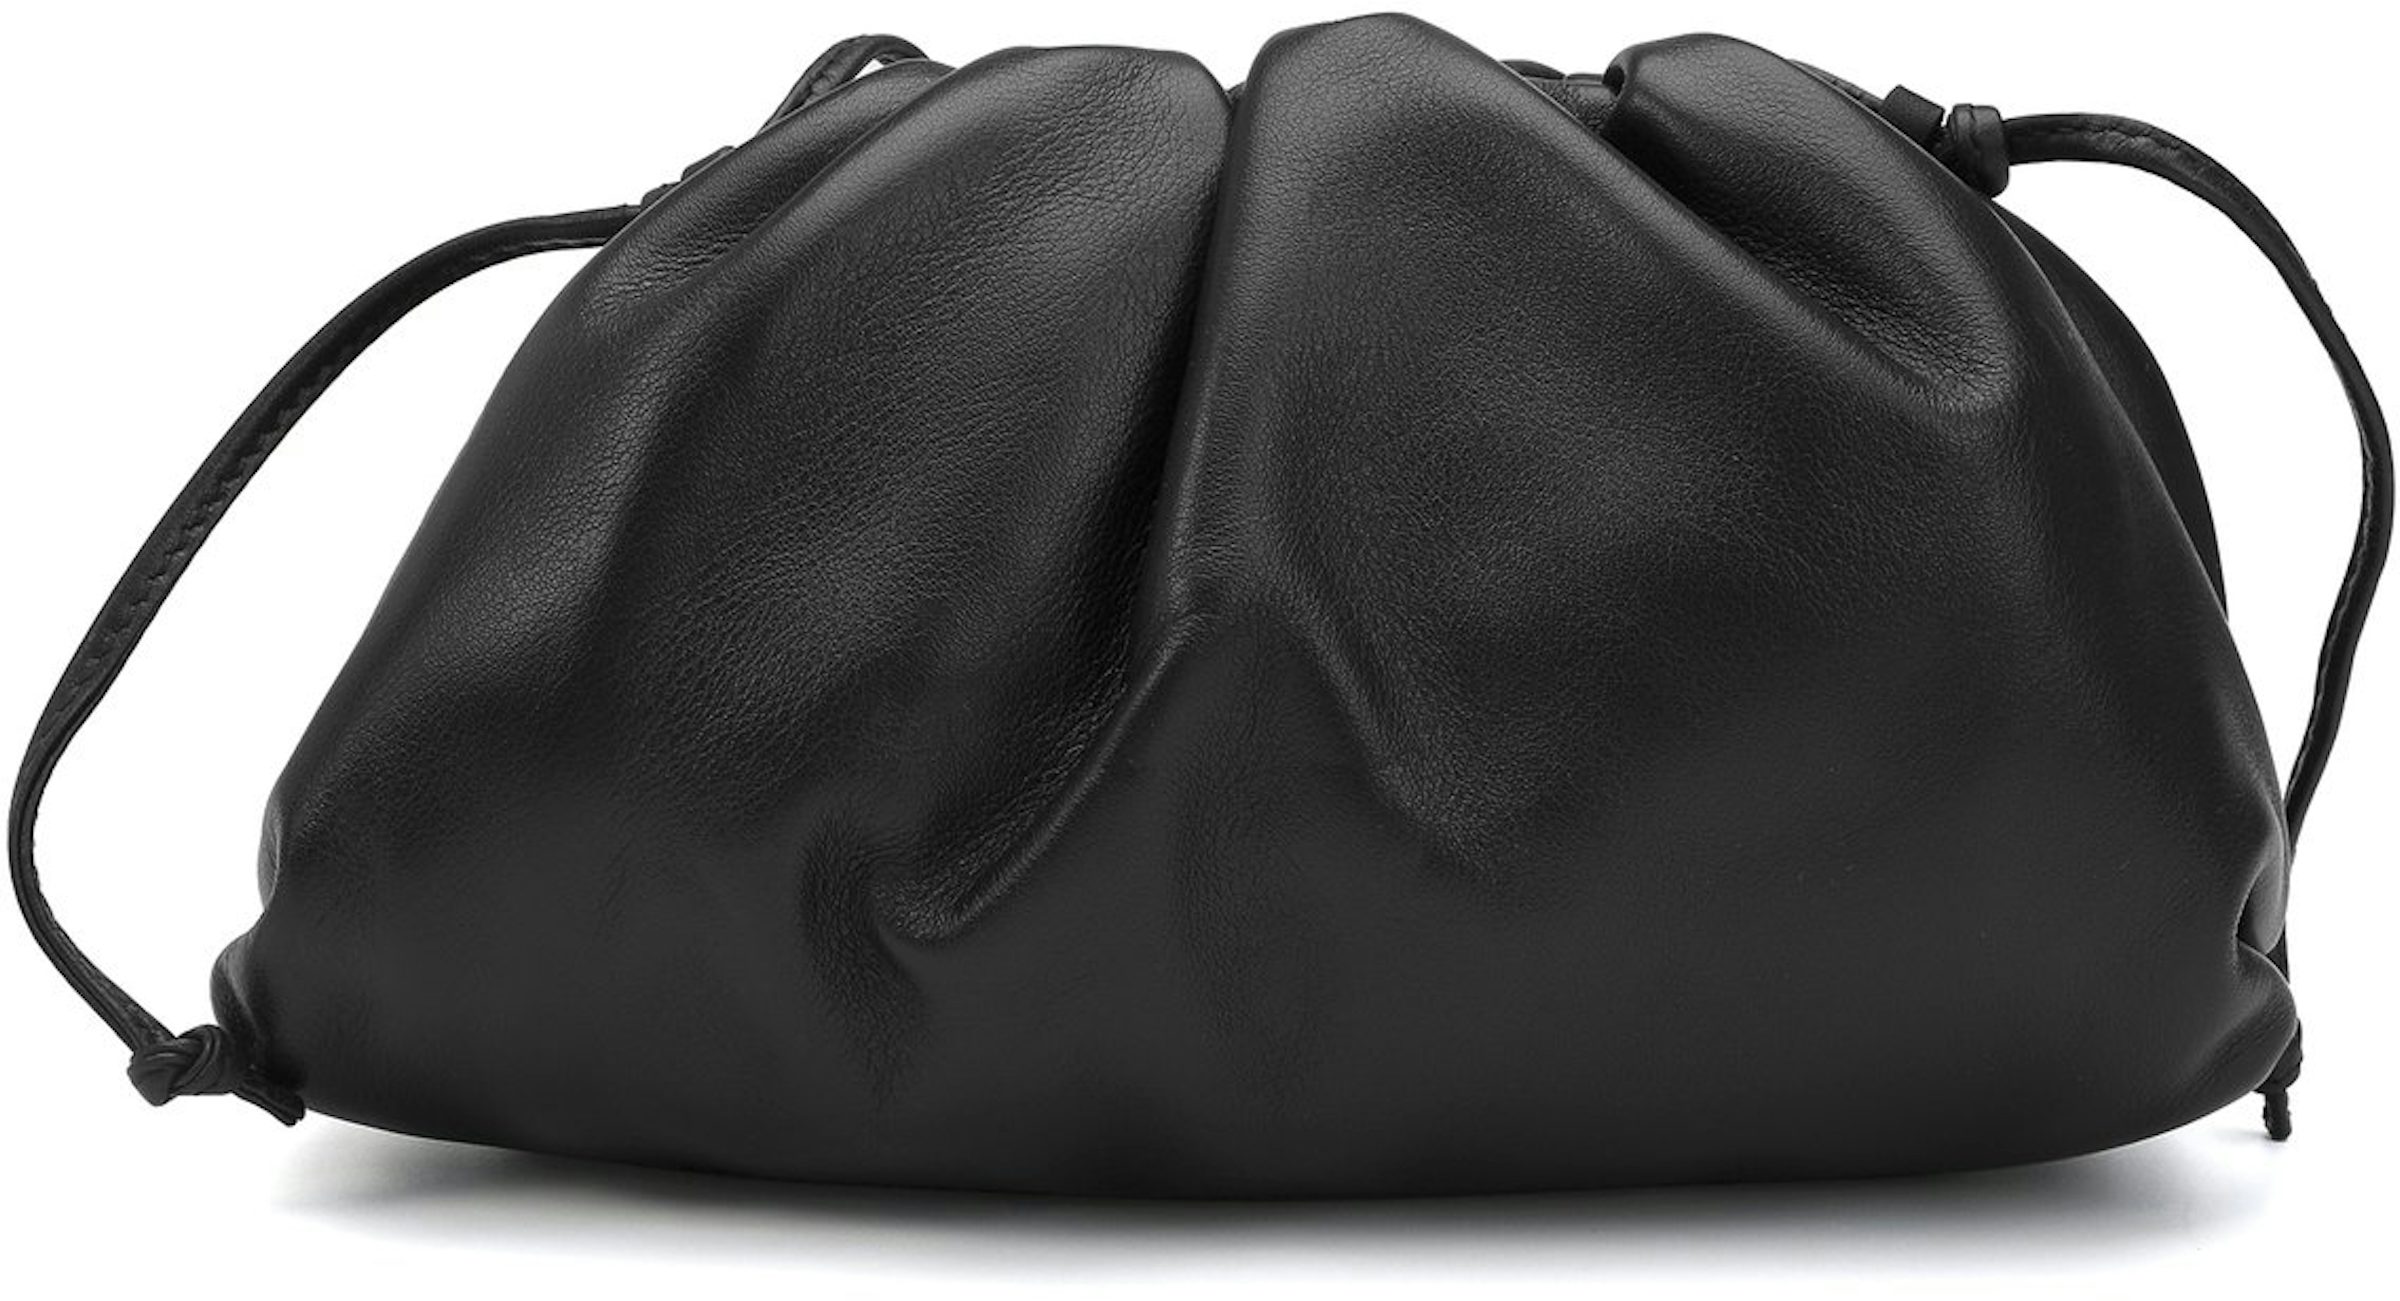 Bottega Veneta black mini pouch bag Archives - STYLE DU MONDE